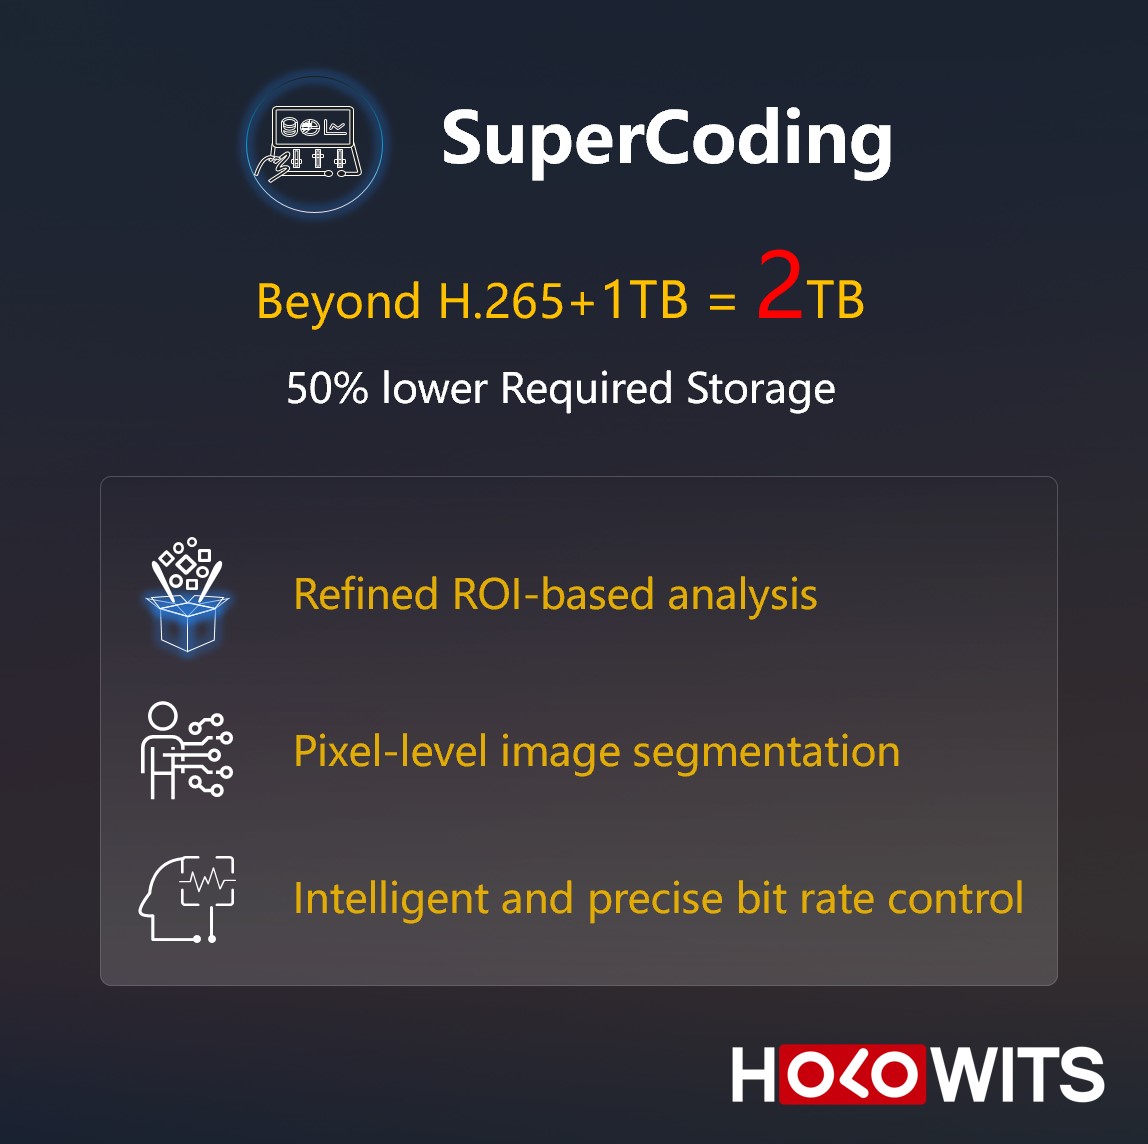 #HOLOWITS AI Root Technology

HOLOWITS SuperCoding Drives Data Storage Saving!♻️ 

 #supercoding #AICamera #AI #iot